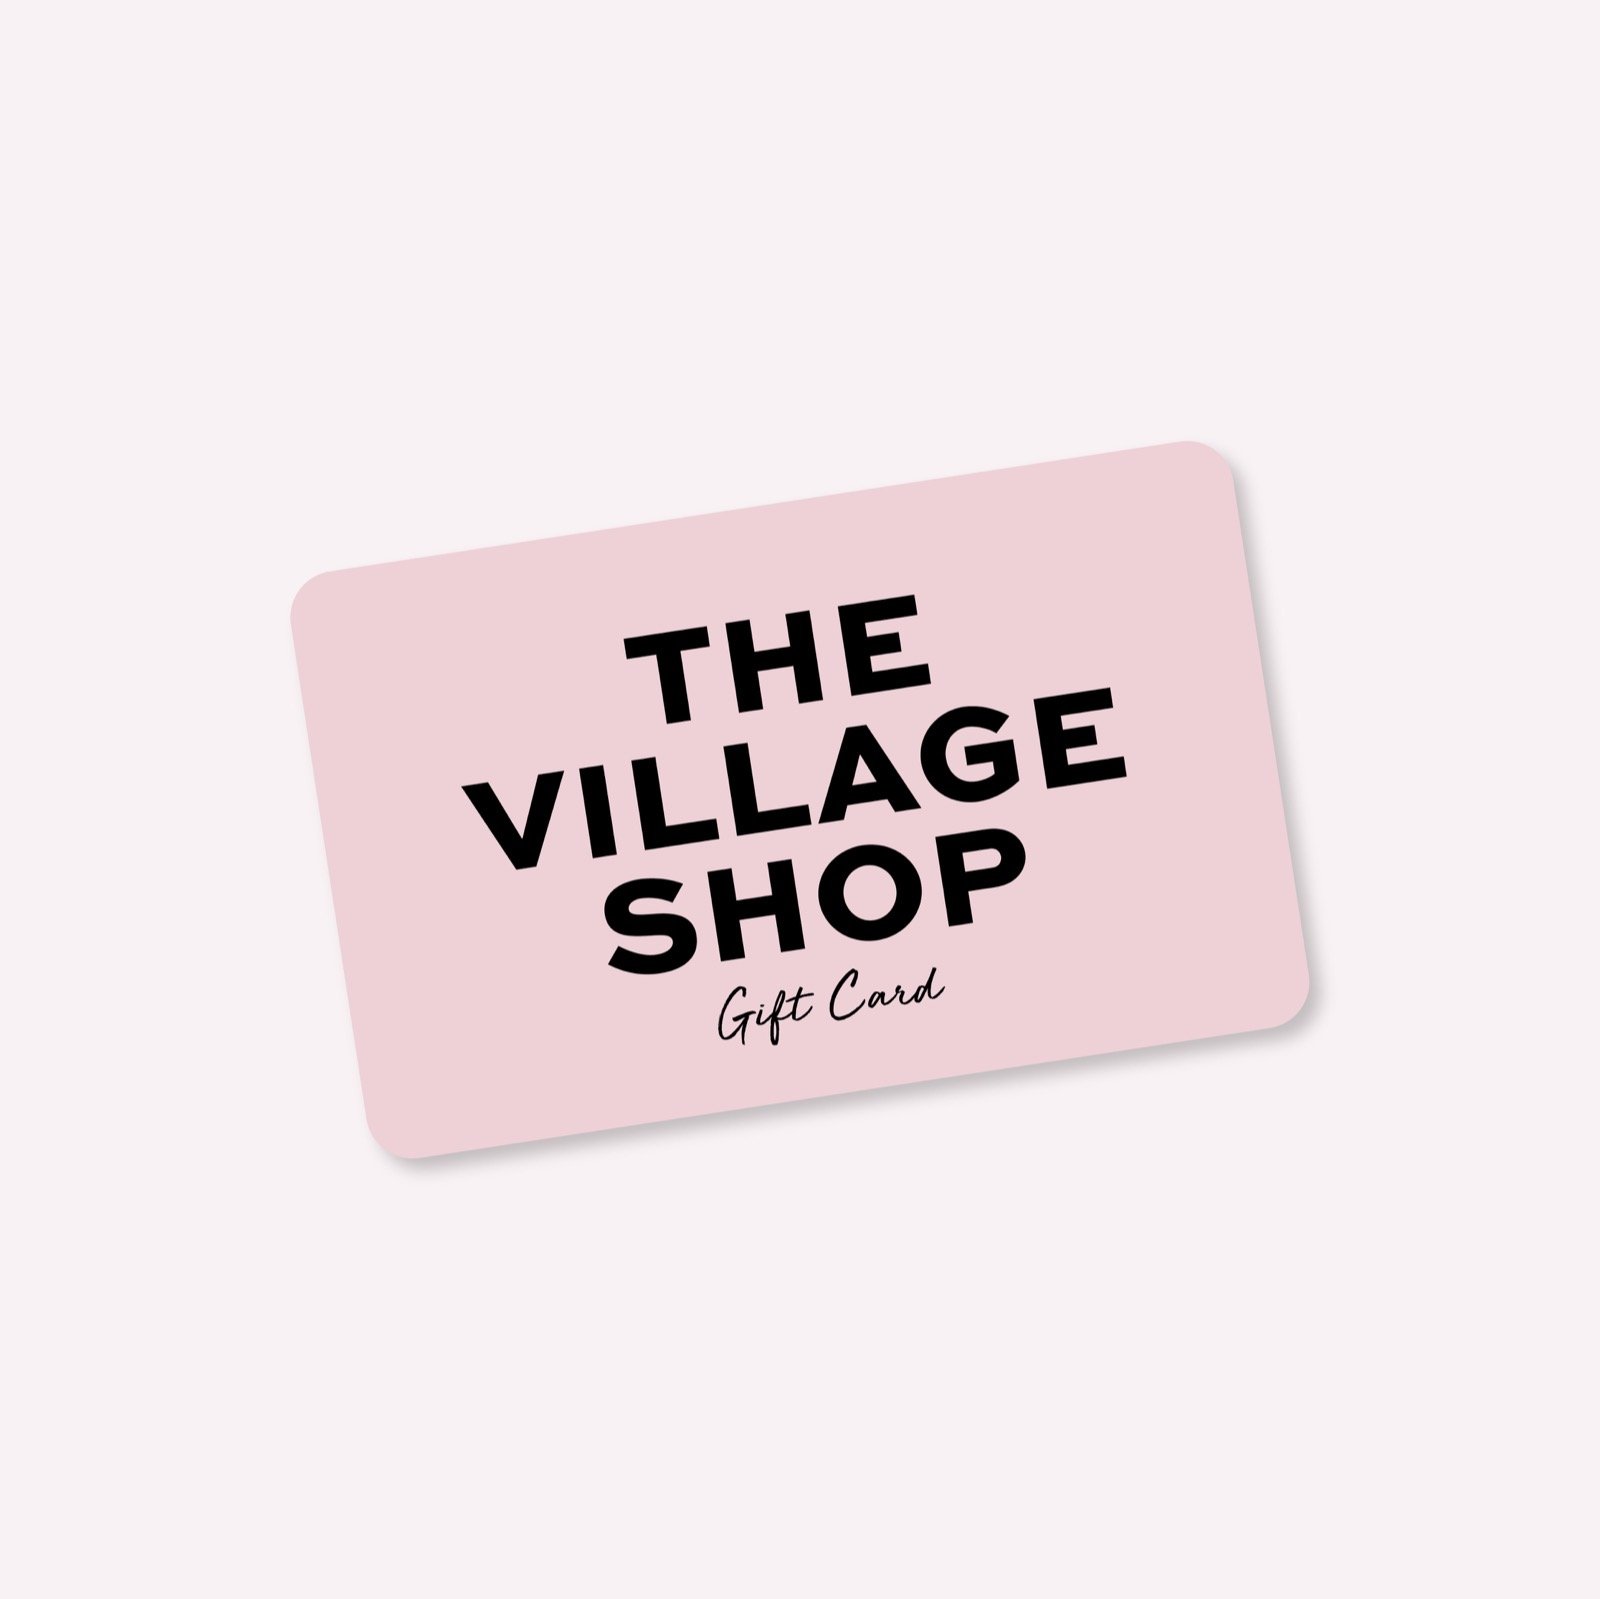 The Village Shop Gift Card.JPG